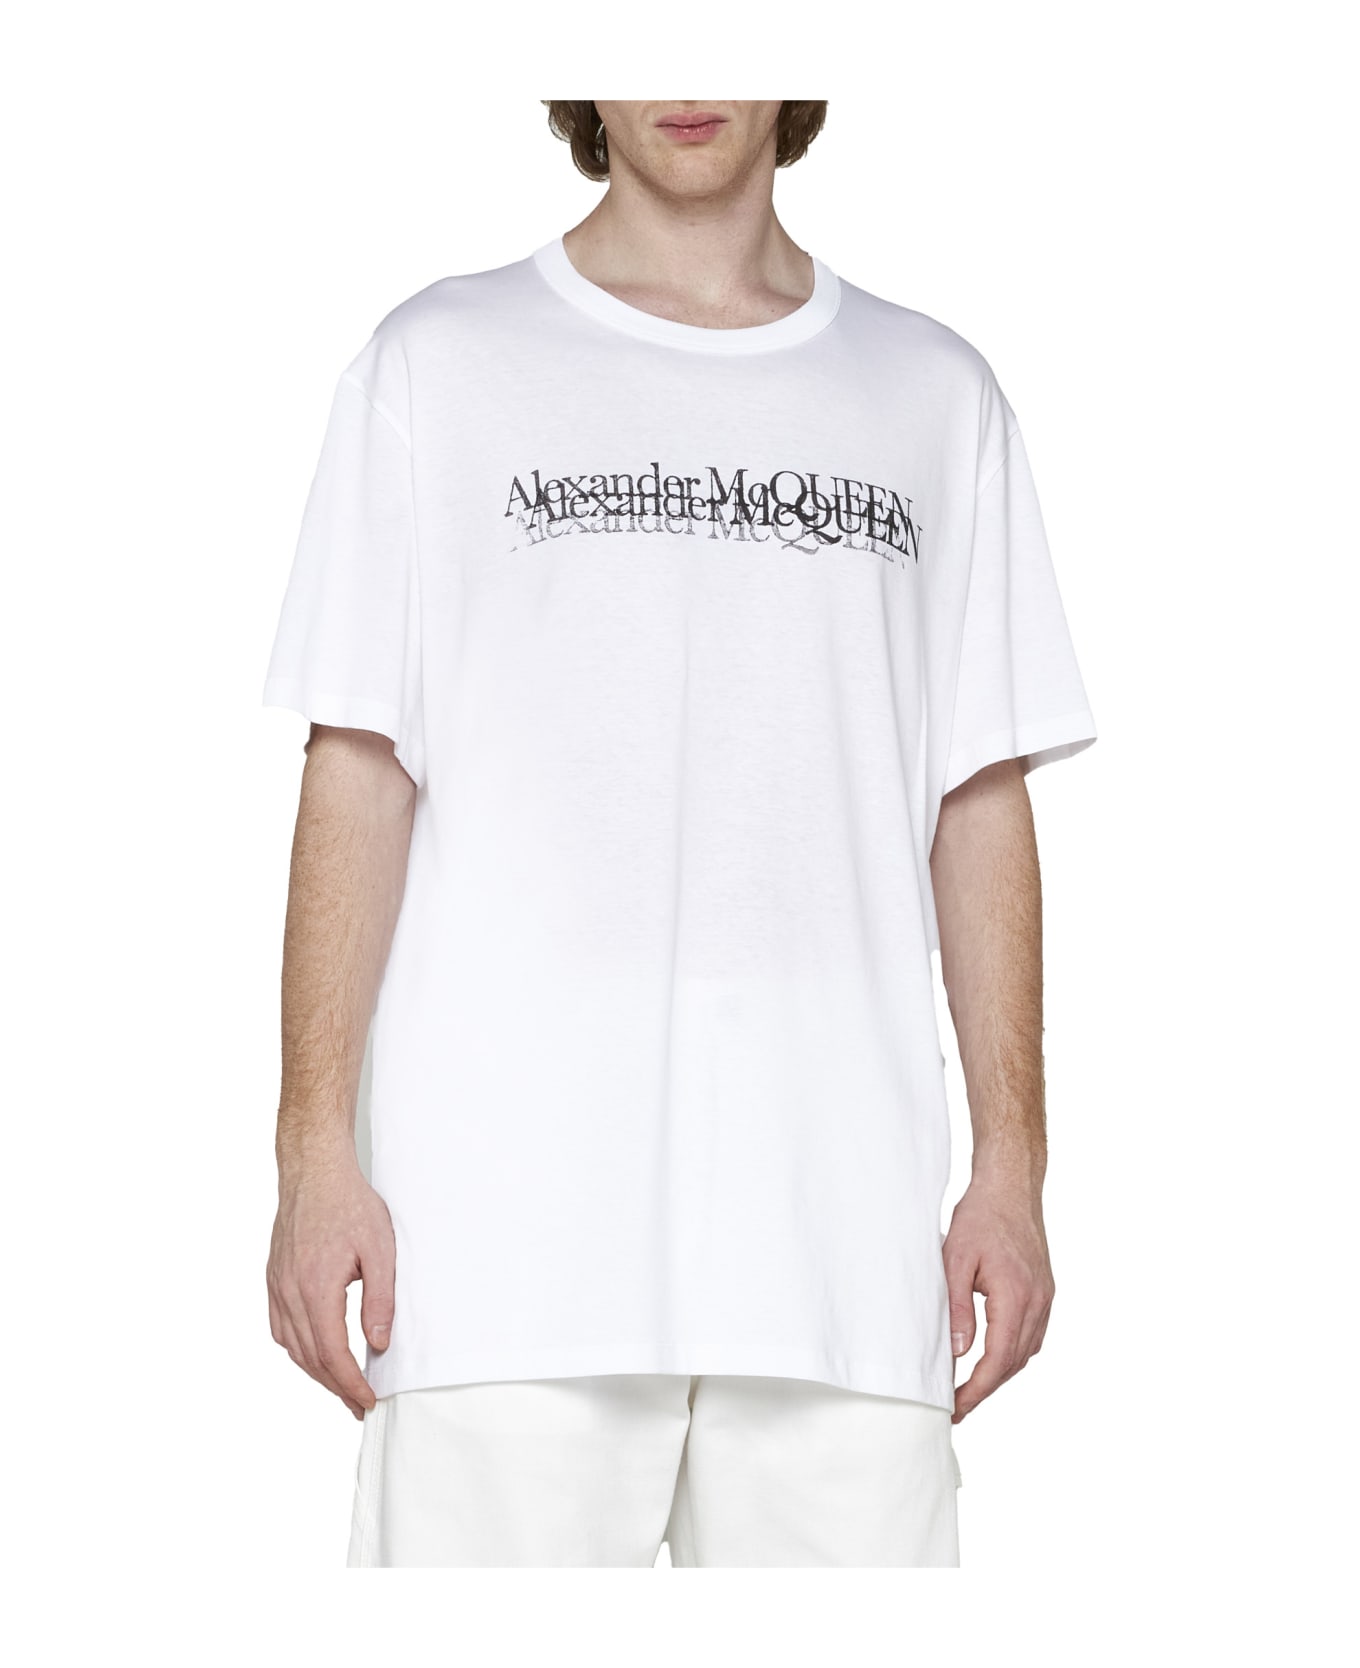 Alexander McQueen Logo T-shirt - White/black